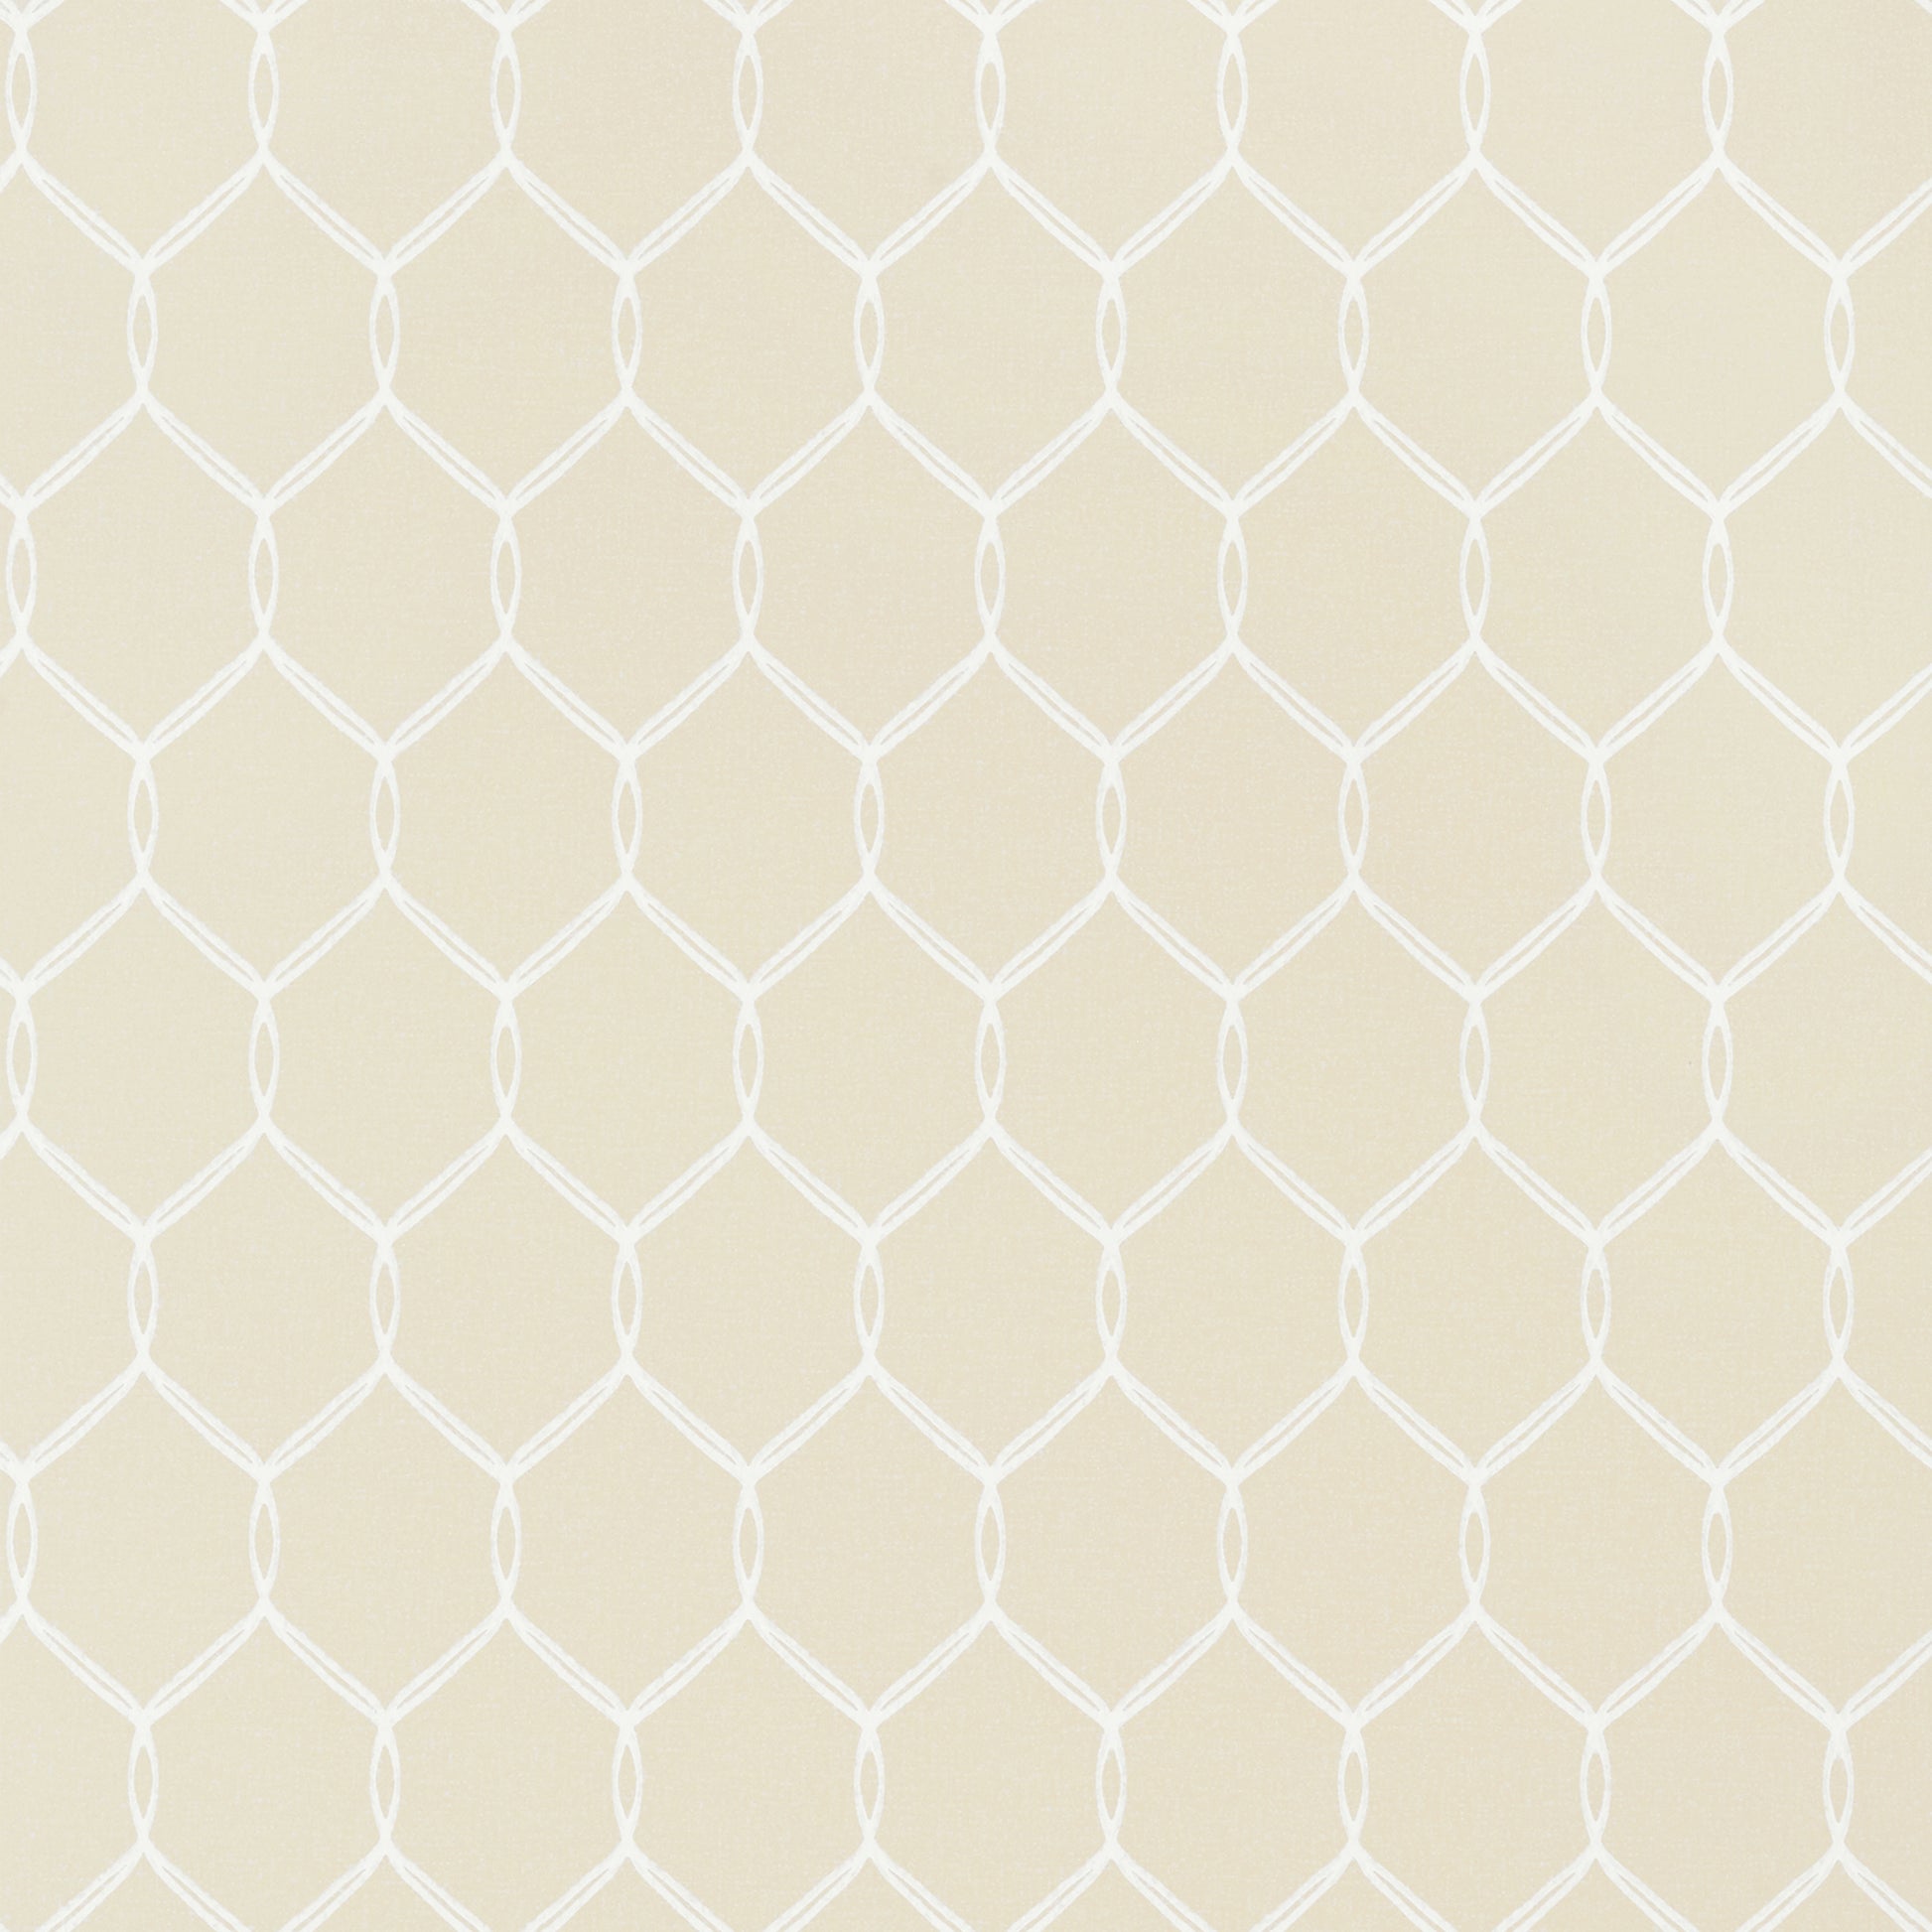 Purchase  Ann French Wallpaper Pattern number AT79151 pattern name  Leland Trellis